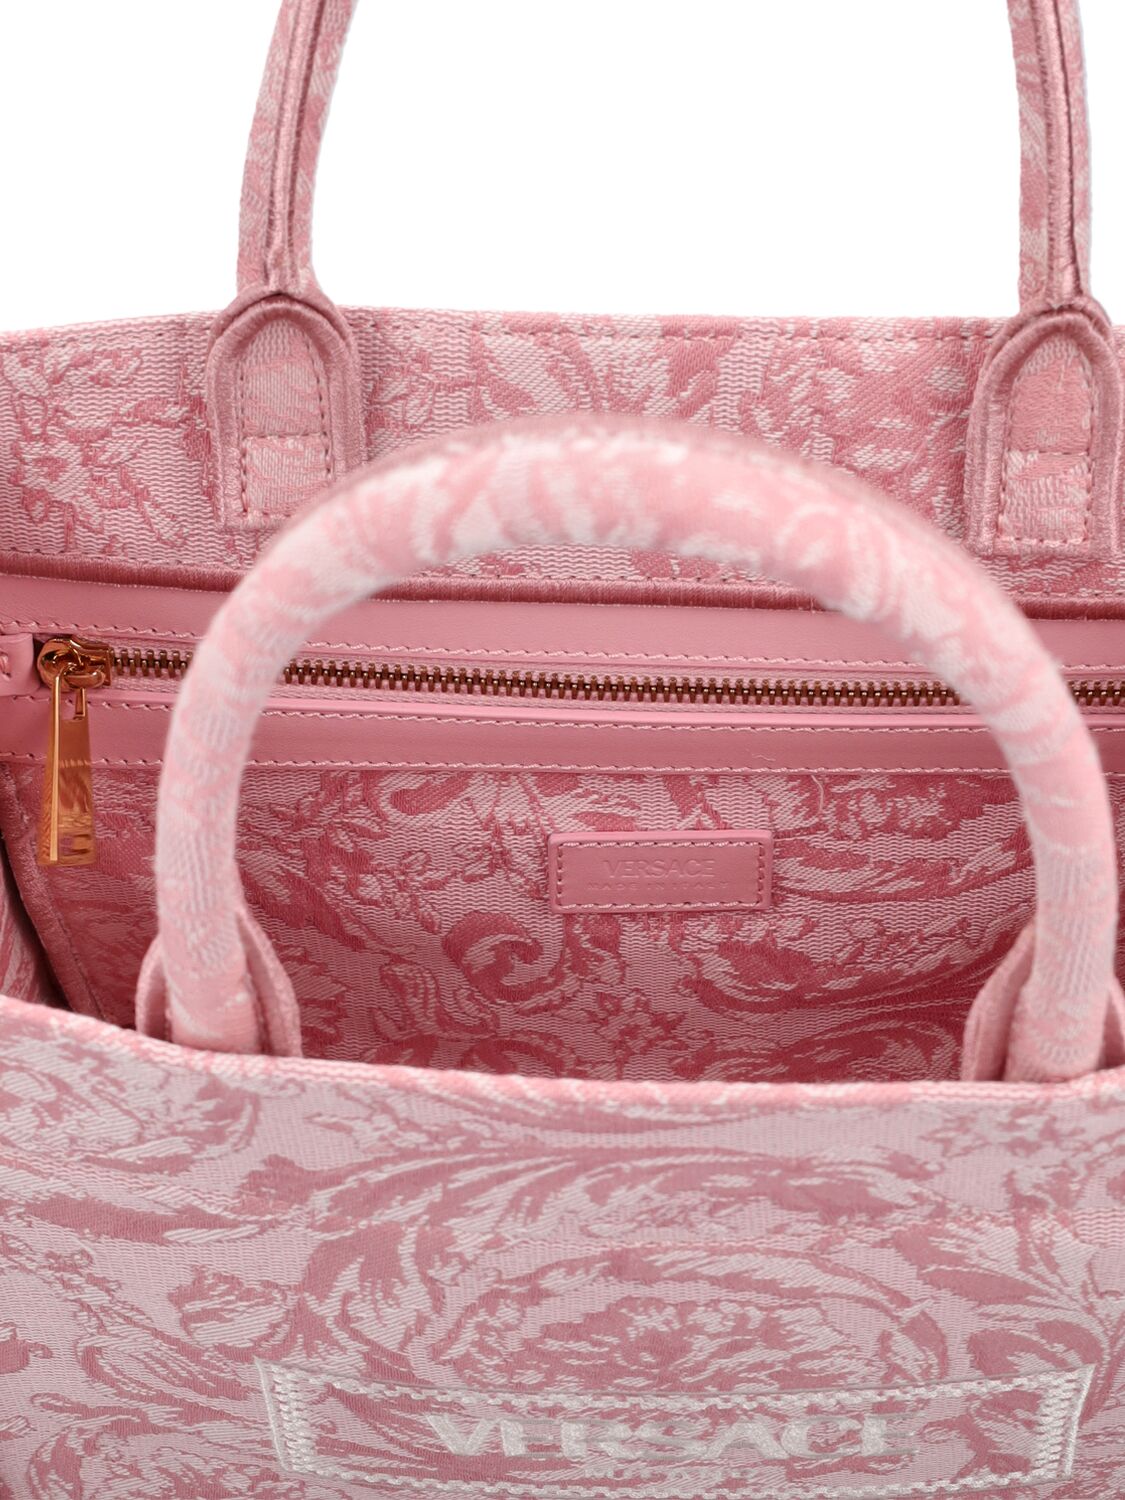 Shop Versace Small Barocco Jacquard Tote Bag In Blasses Pink